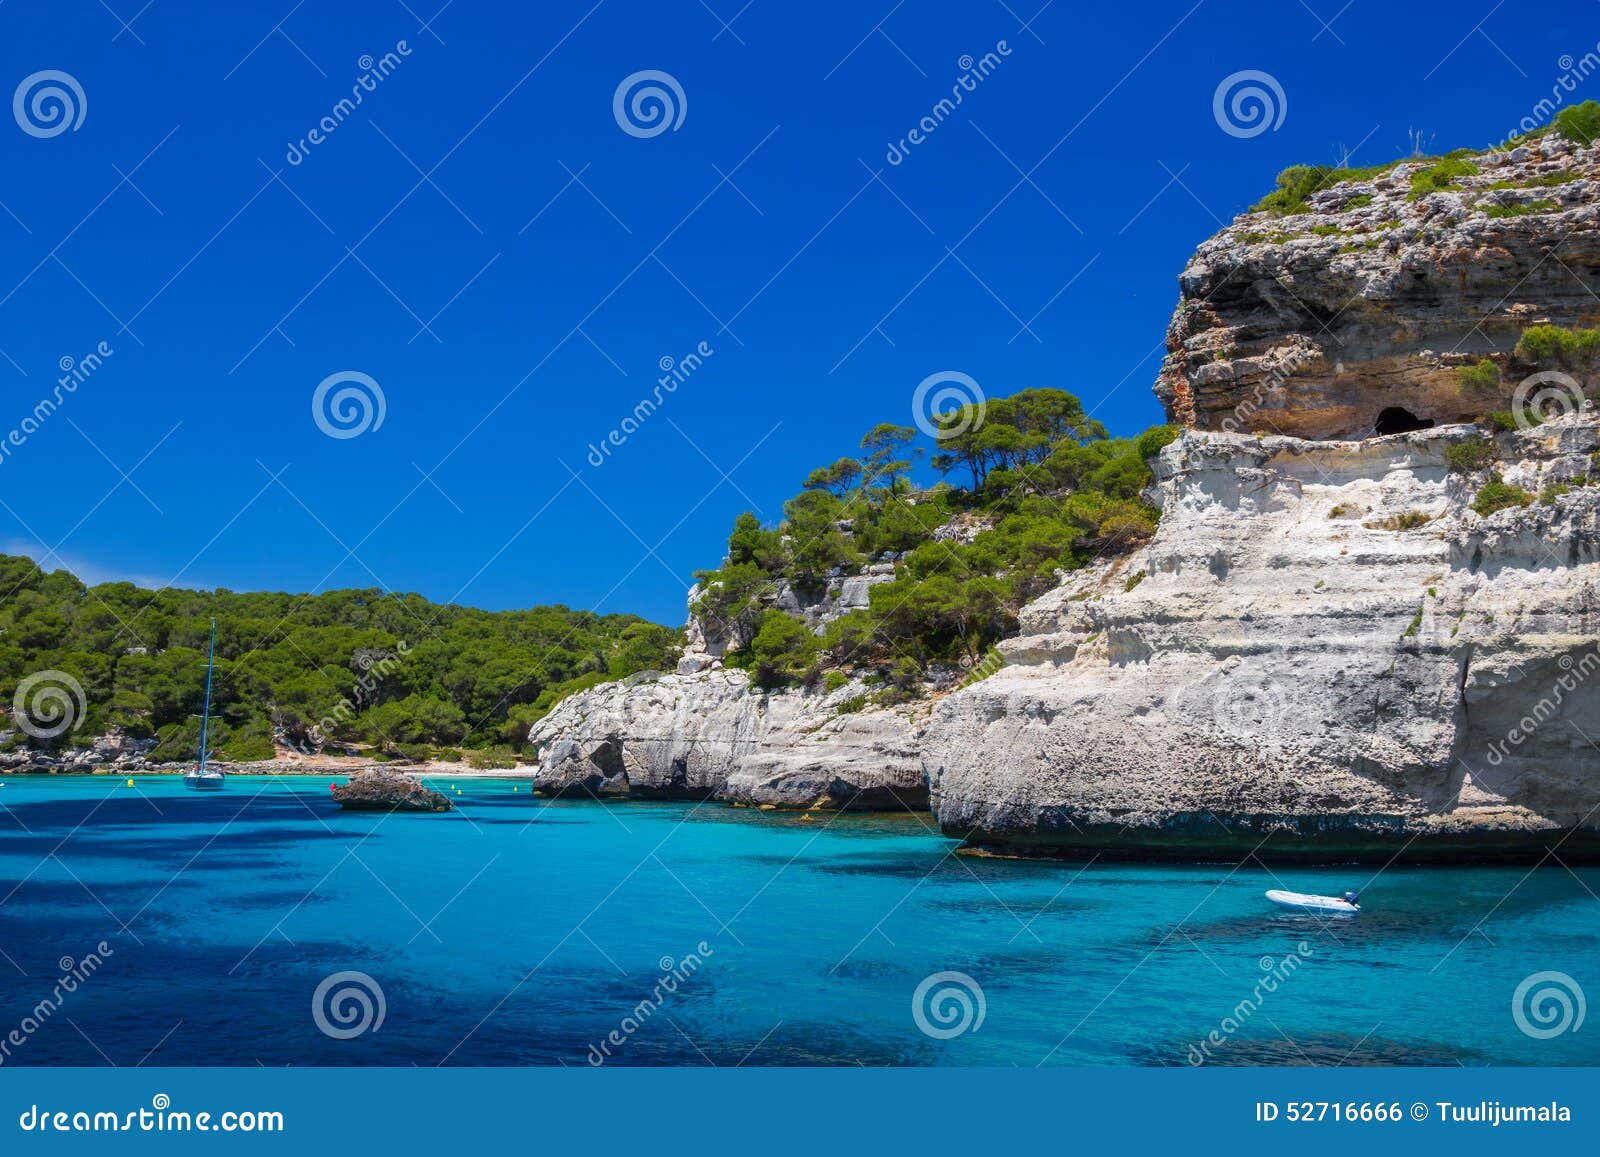 cala macarelleta beach cliffs